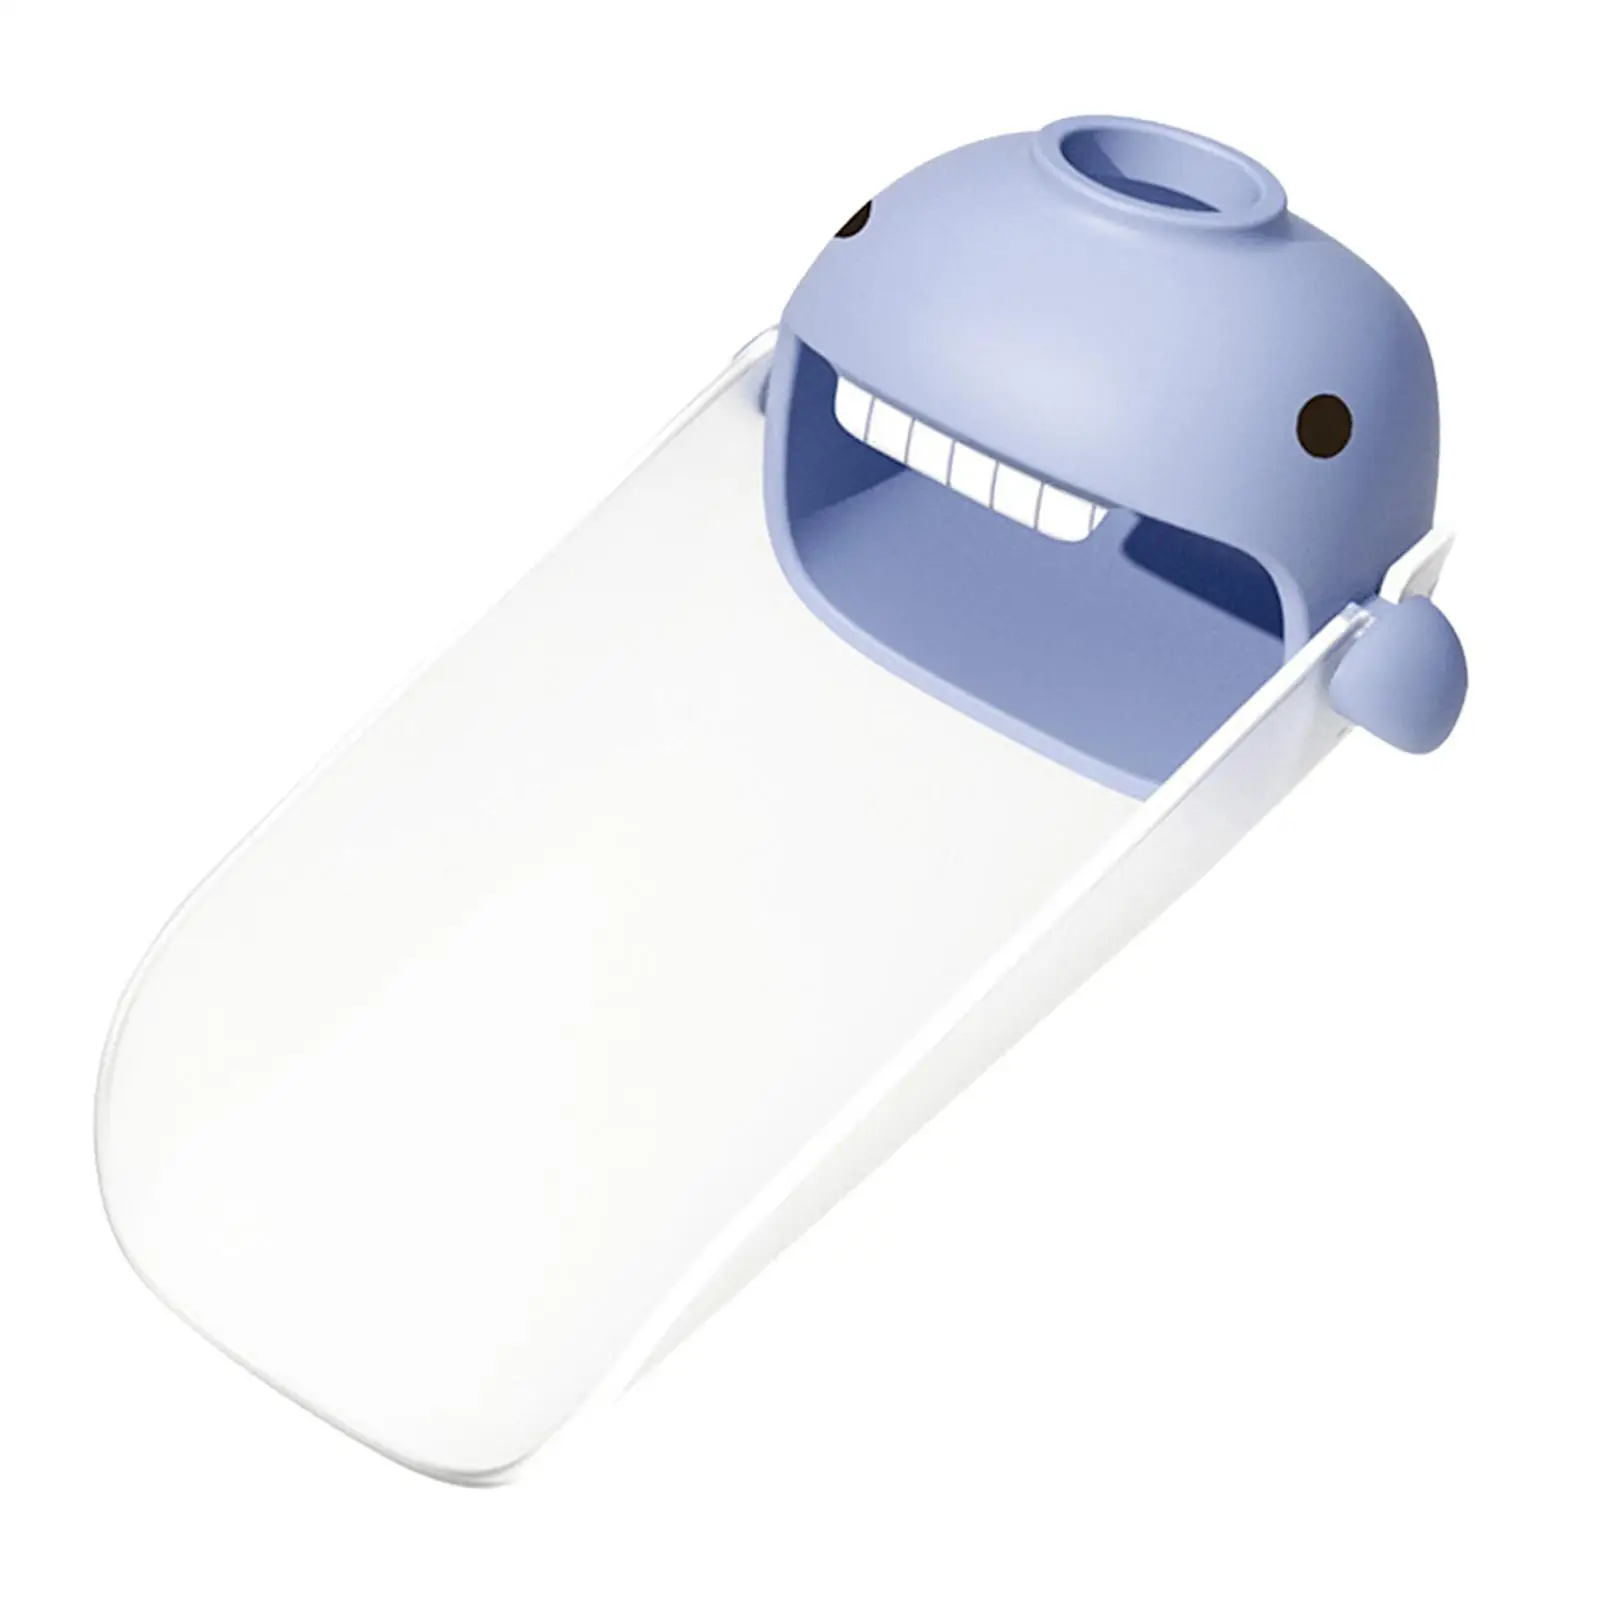 Cute Water Faucet Tap Extender 14cm water Saving Universal for Toddler